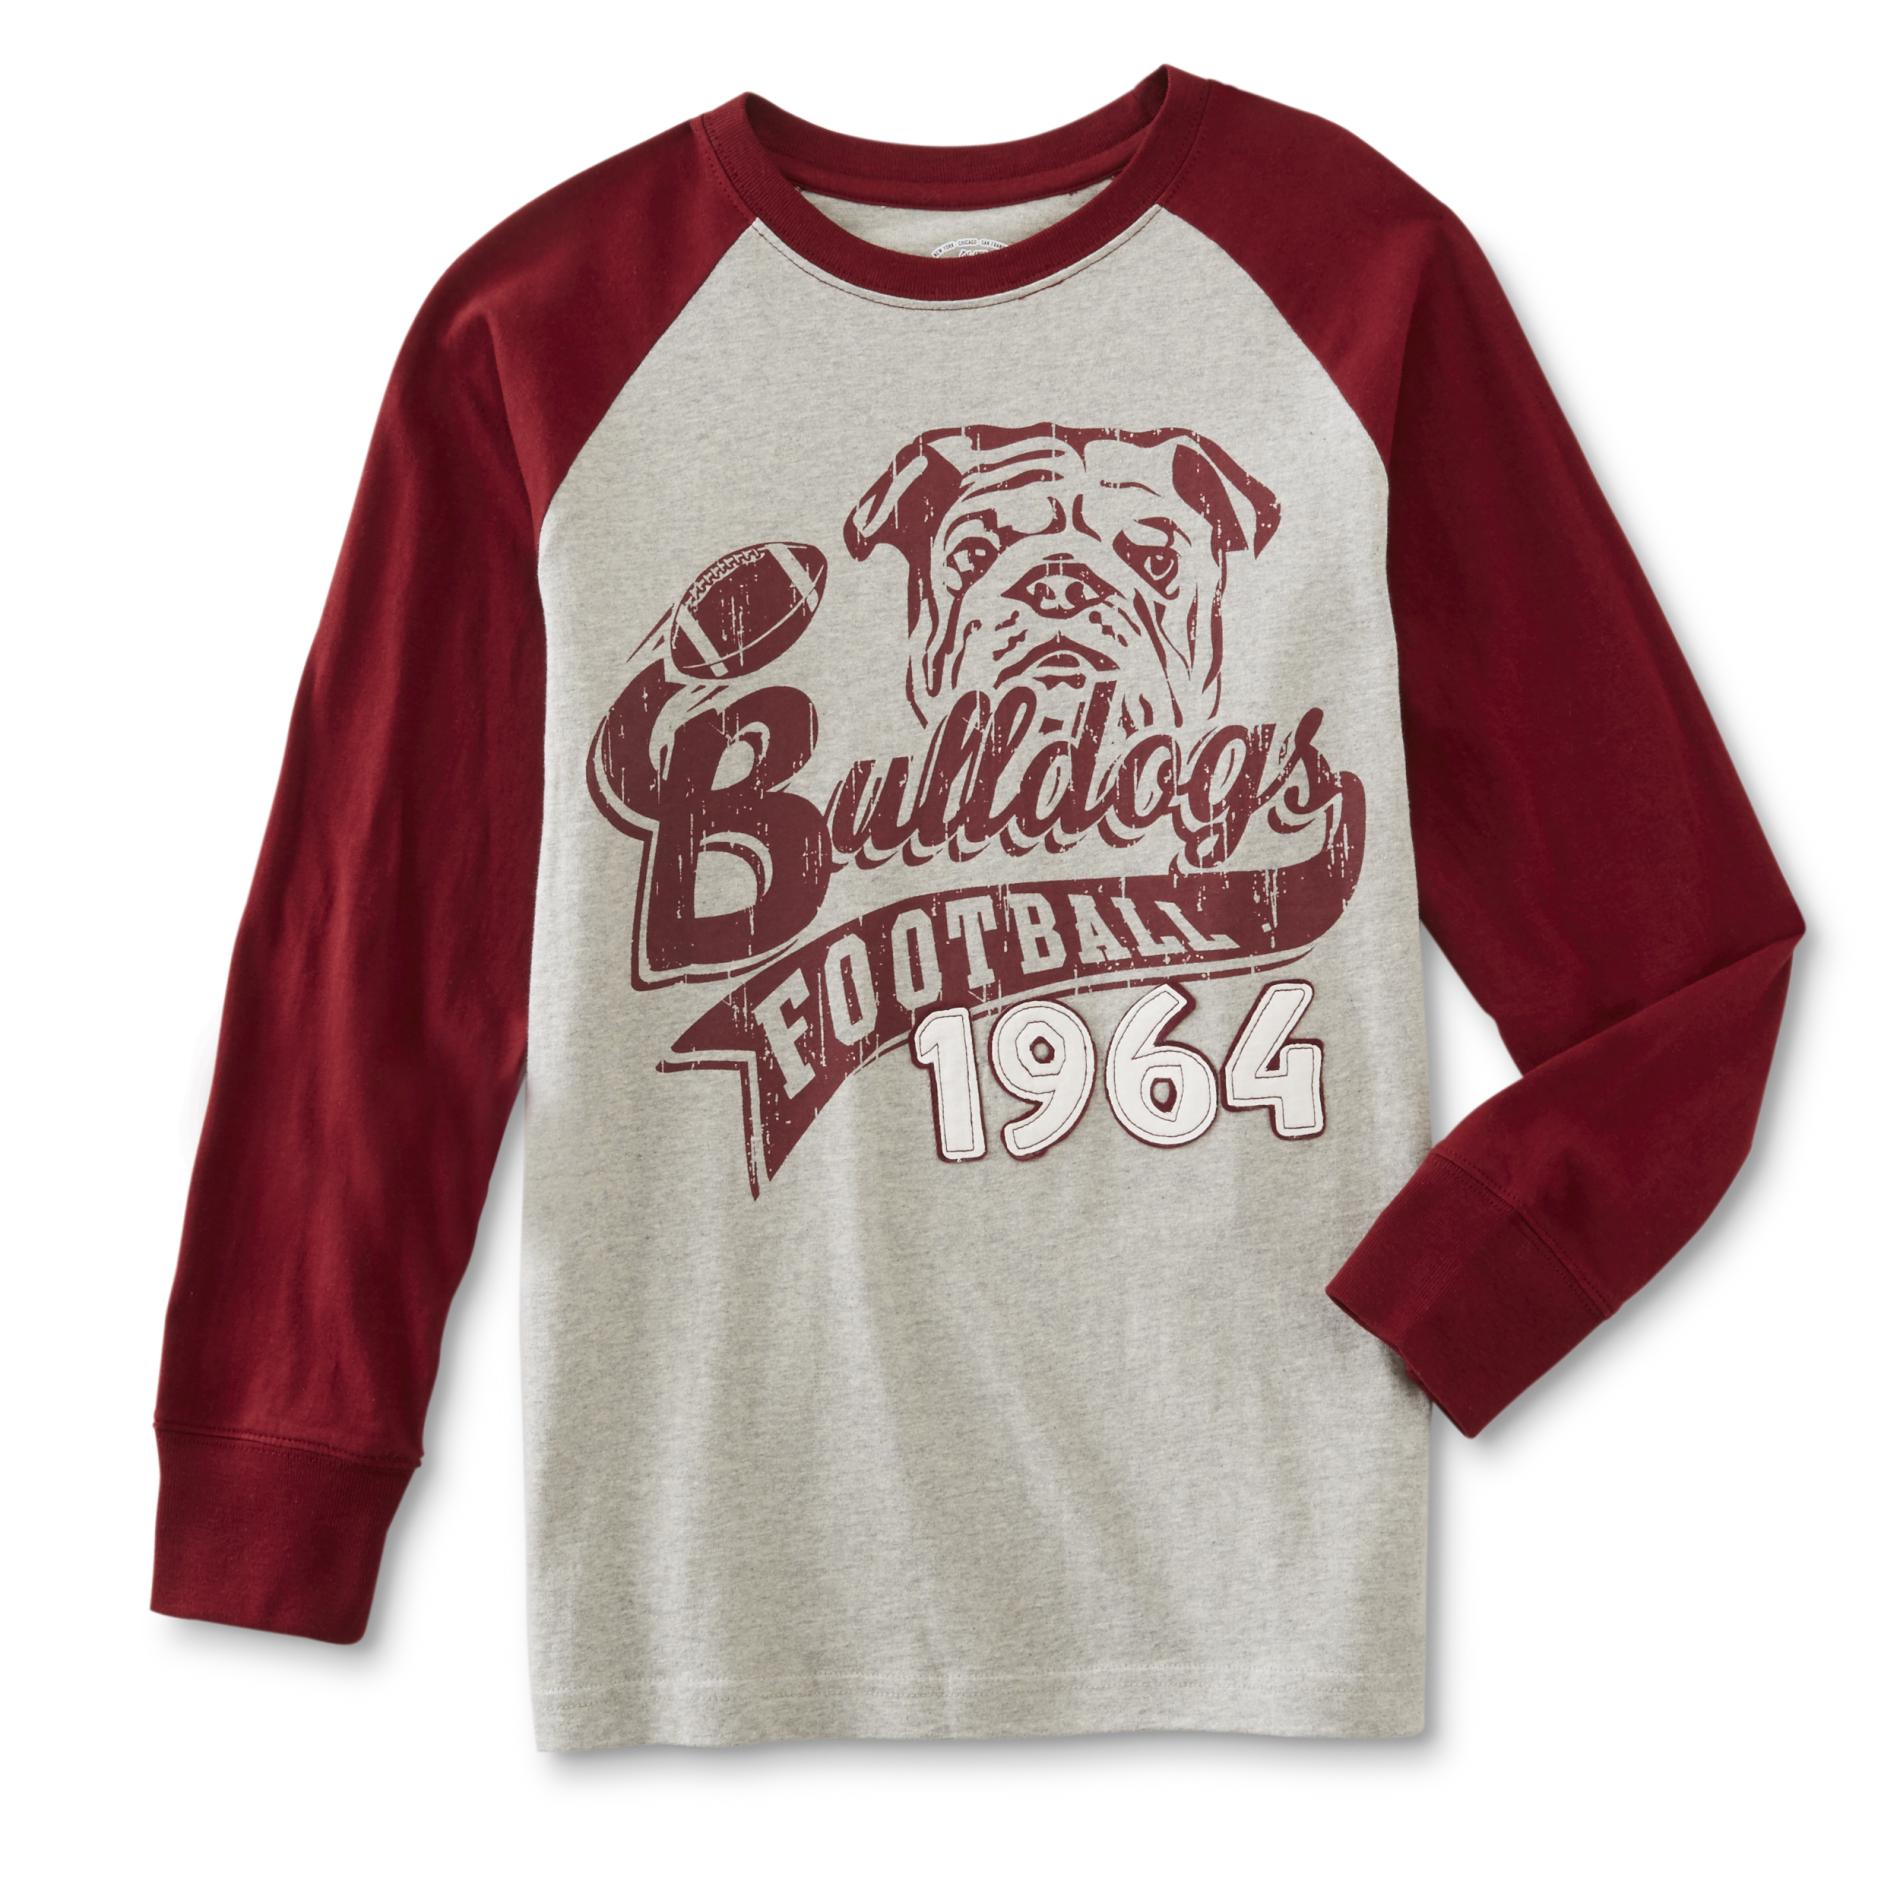 Roebuck & Co. Boy's Raglan Graphic T-Shirt - Bulldogs Football